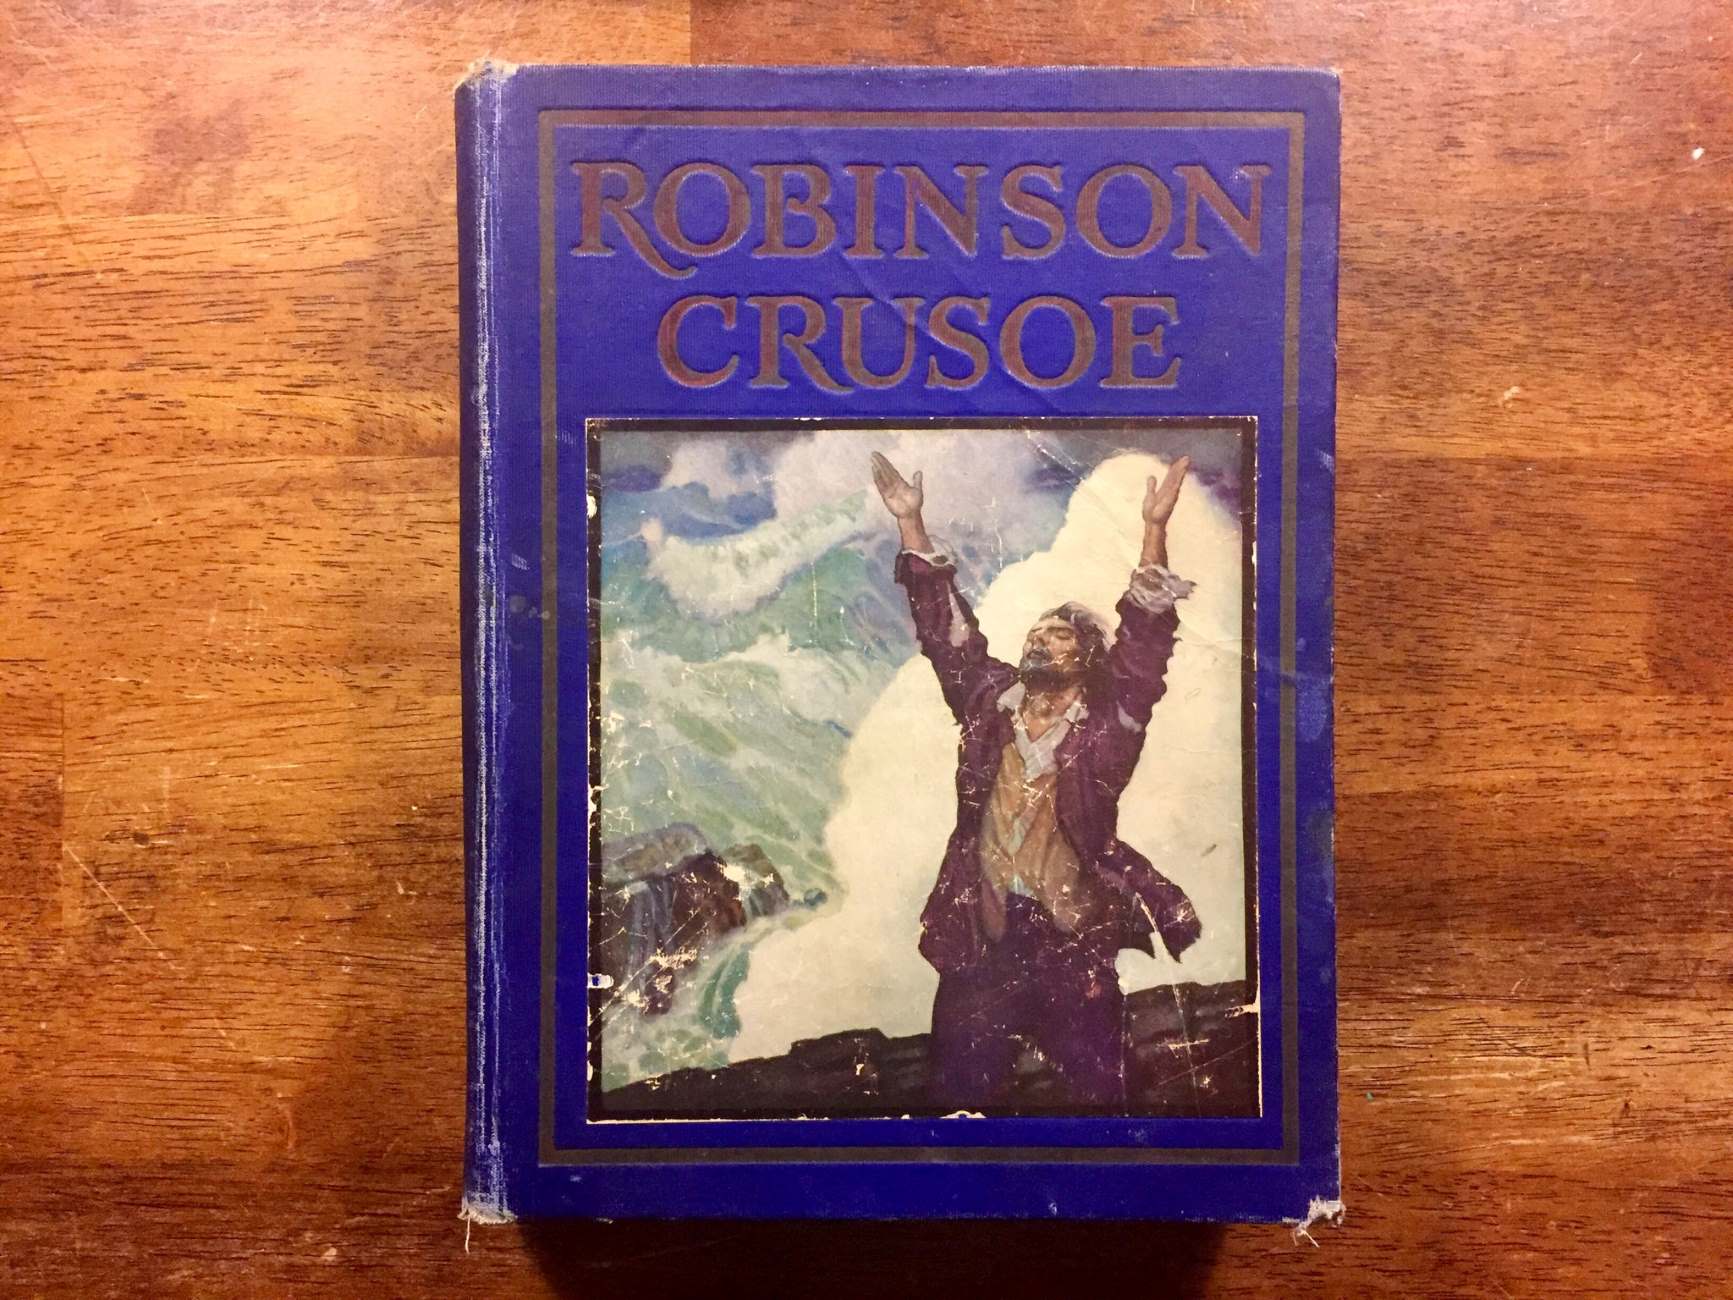 Robinson Crusoé - E-book - Daniel Defoe - Storytel